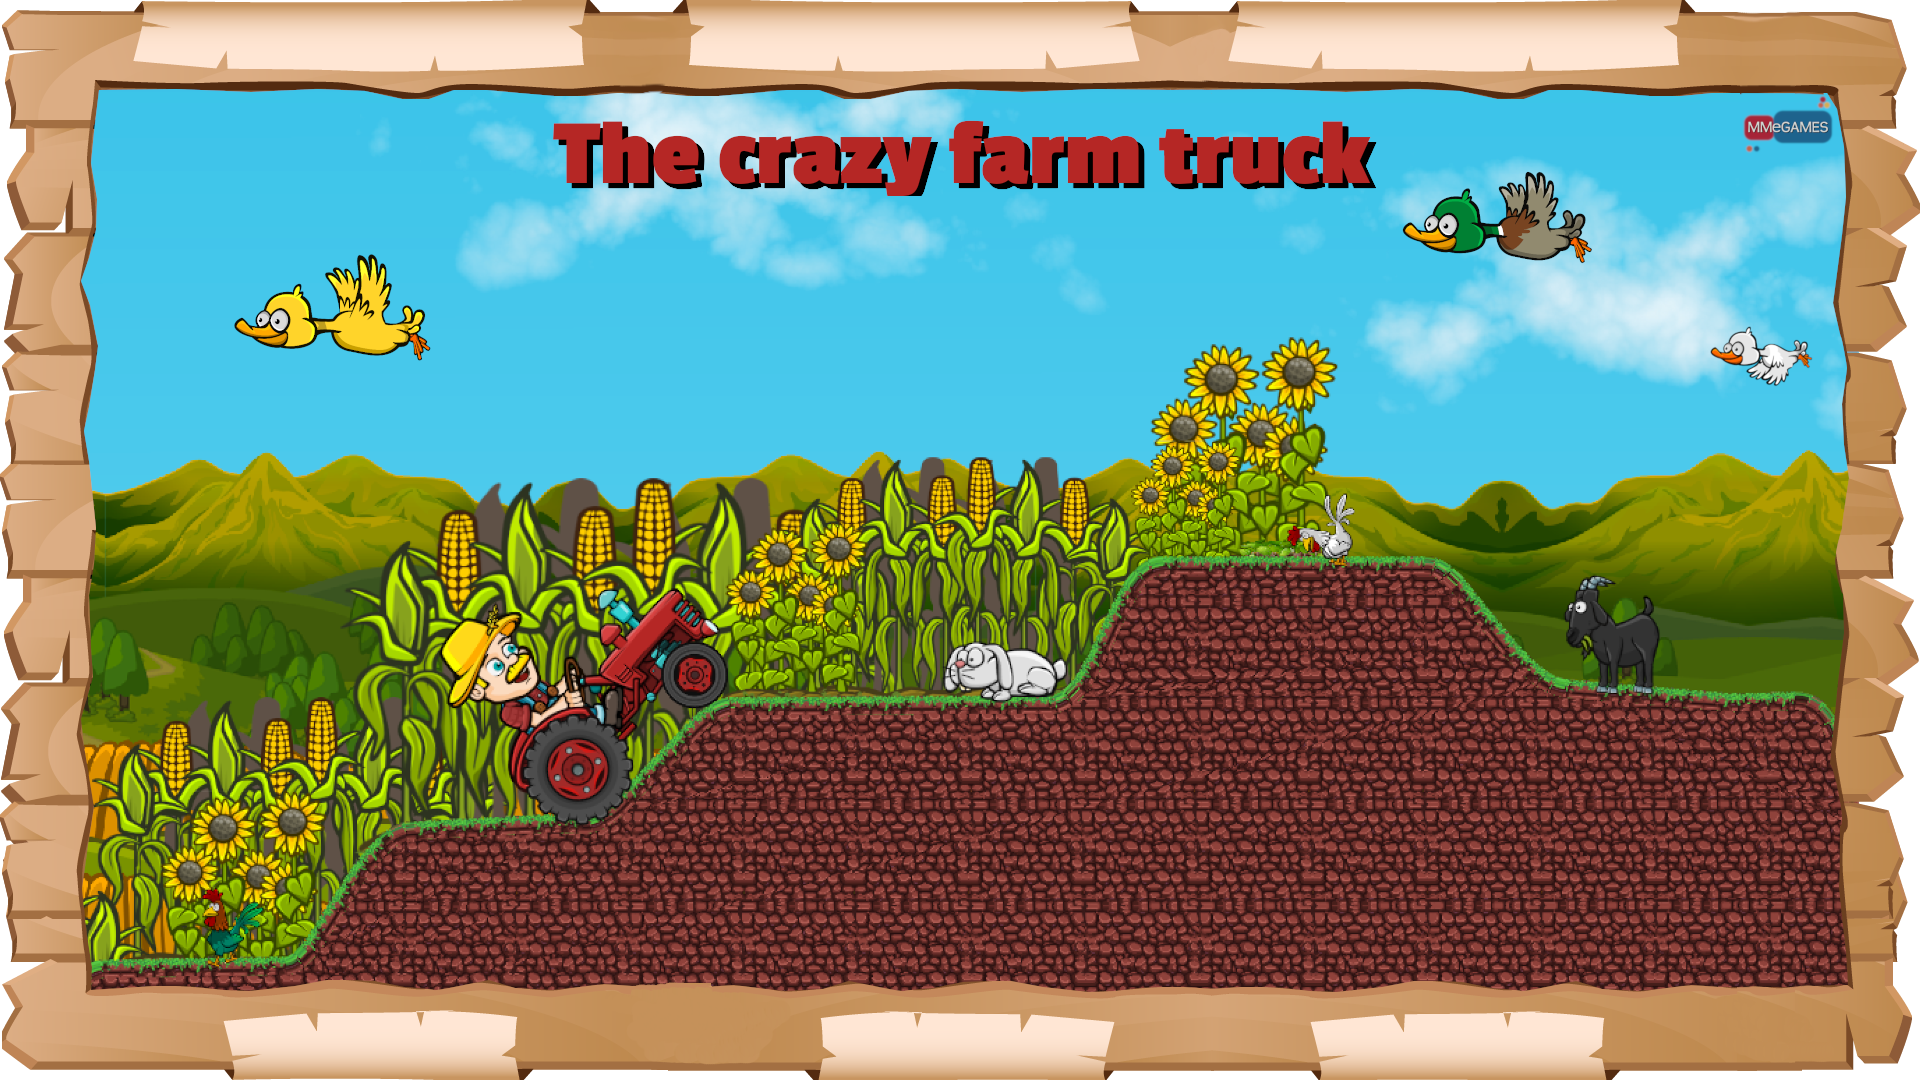 The crazy farm truck